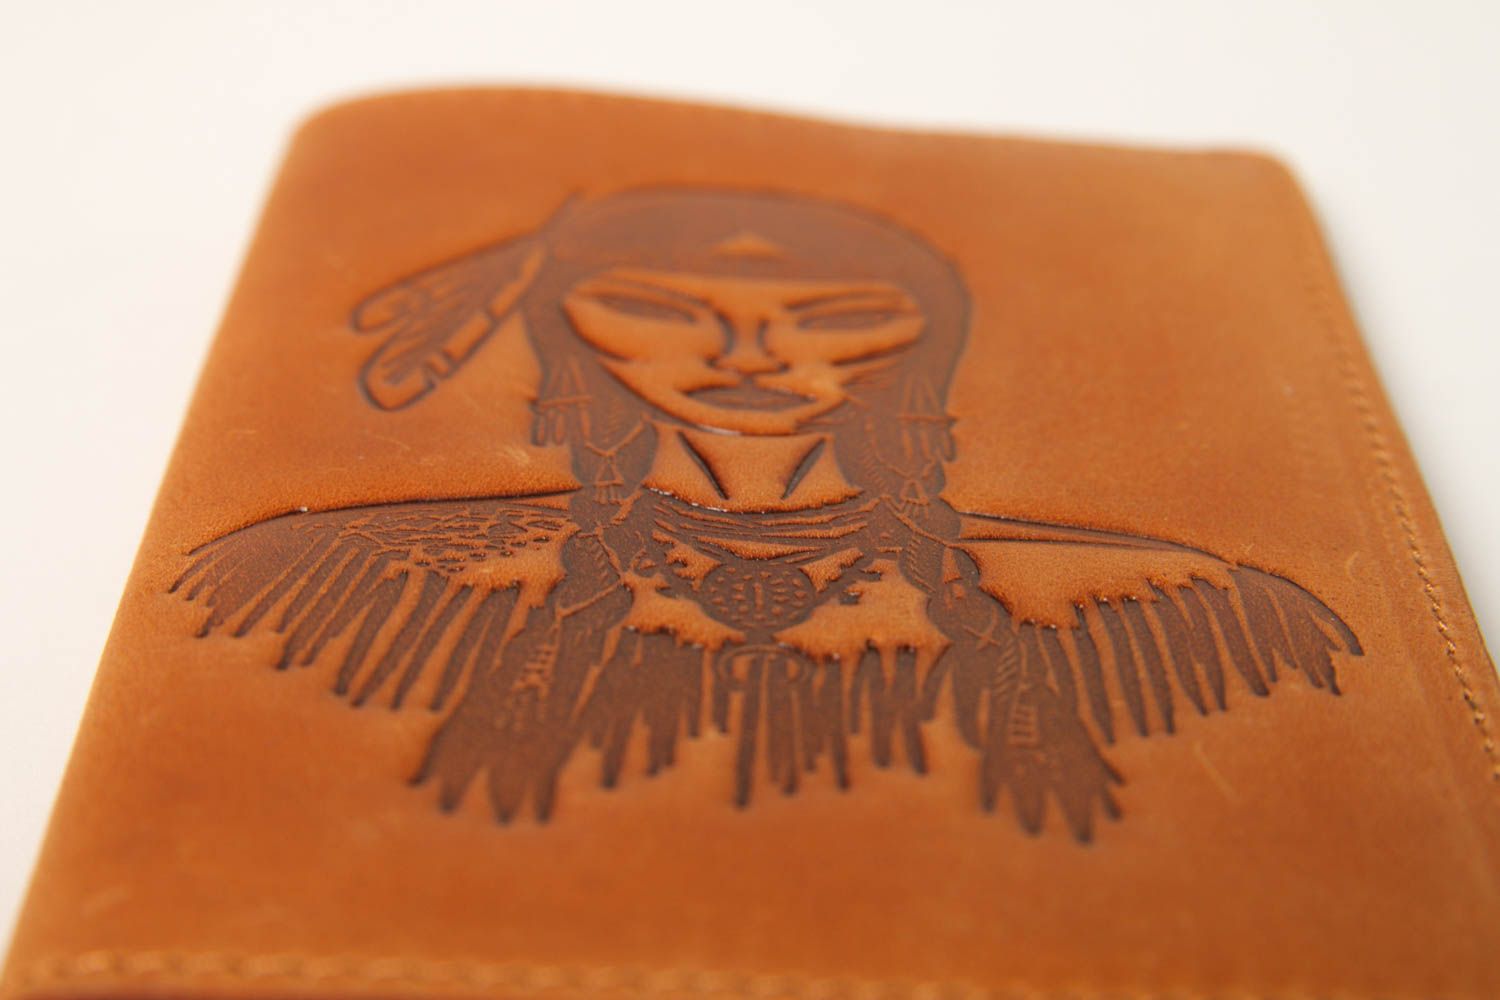 Unusual handmade passport cover leather goods handmade accessories gift ideas photo 5